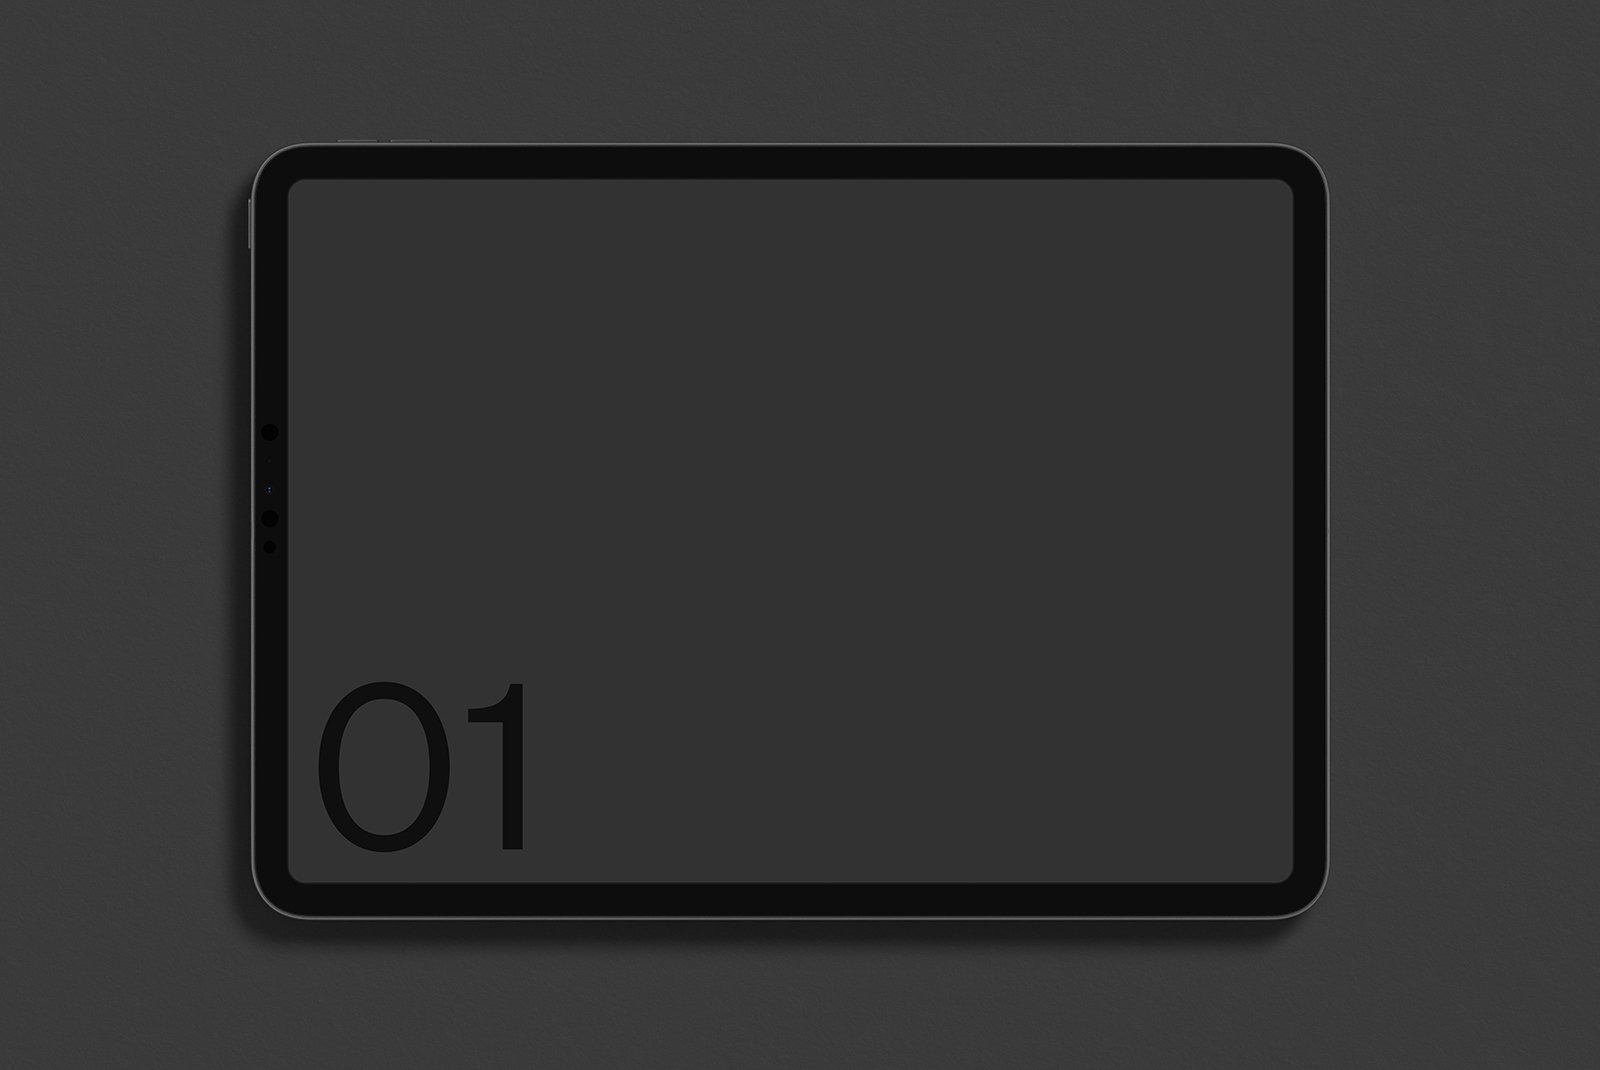 iPad Pro 01 Standard Mockup preview image.